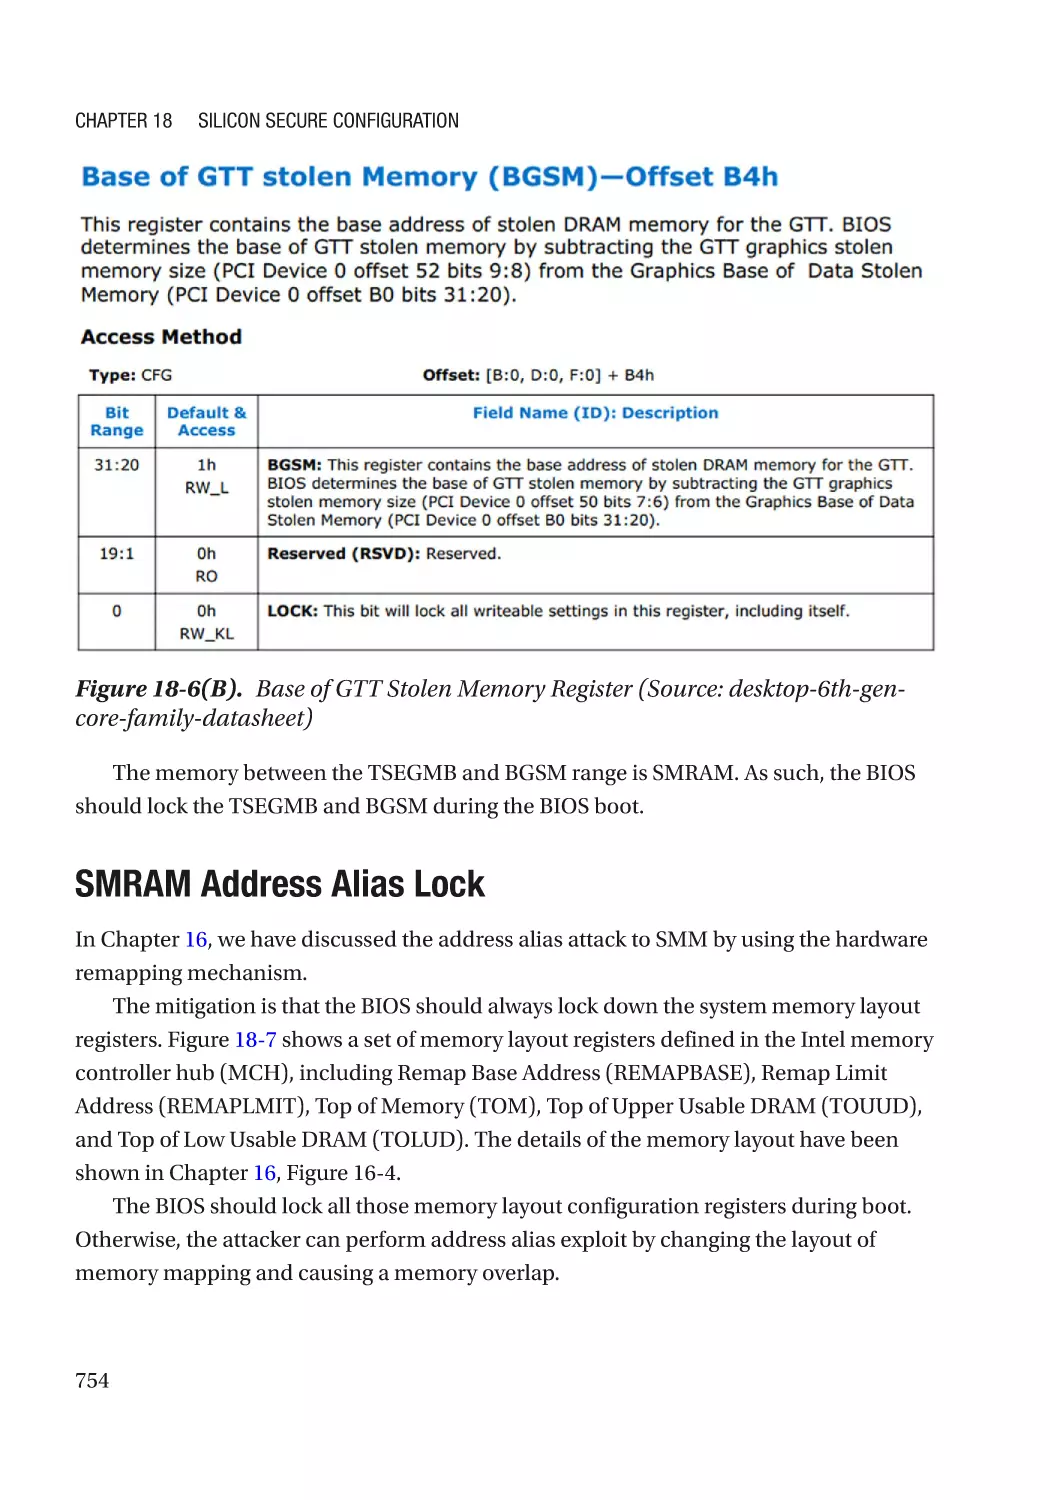 SMRAM Address Alias Lock